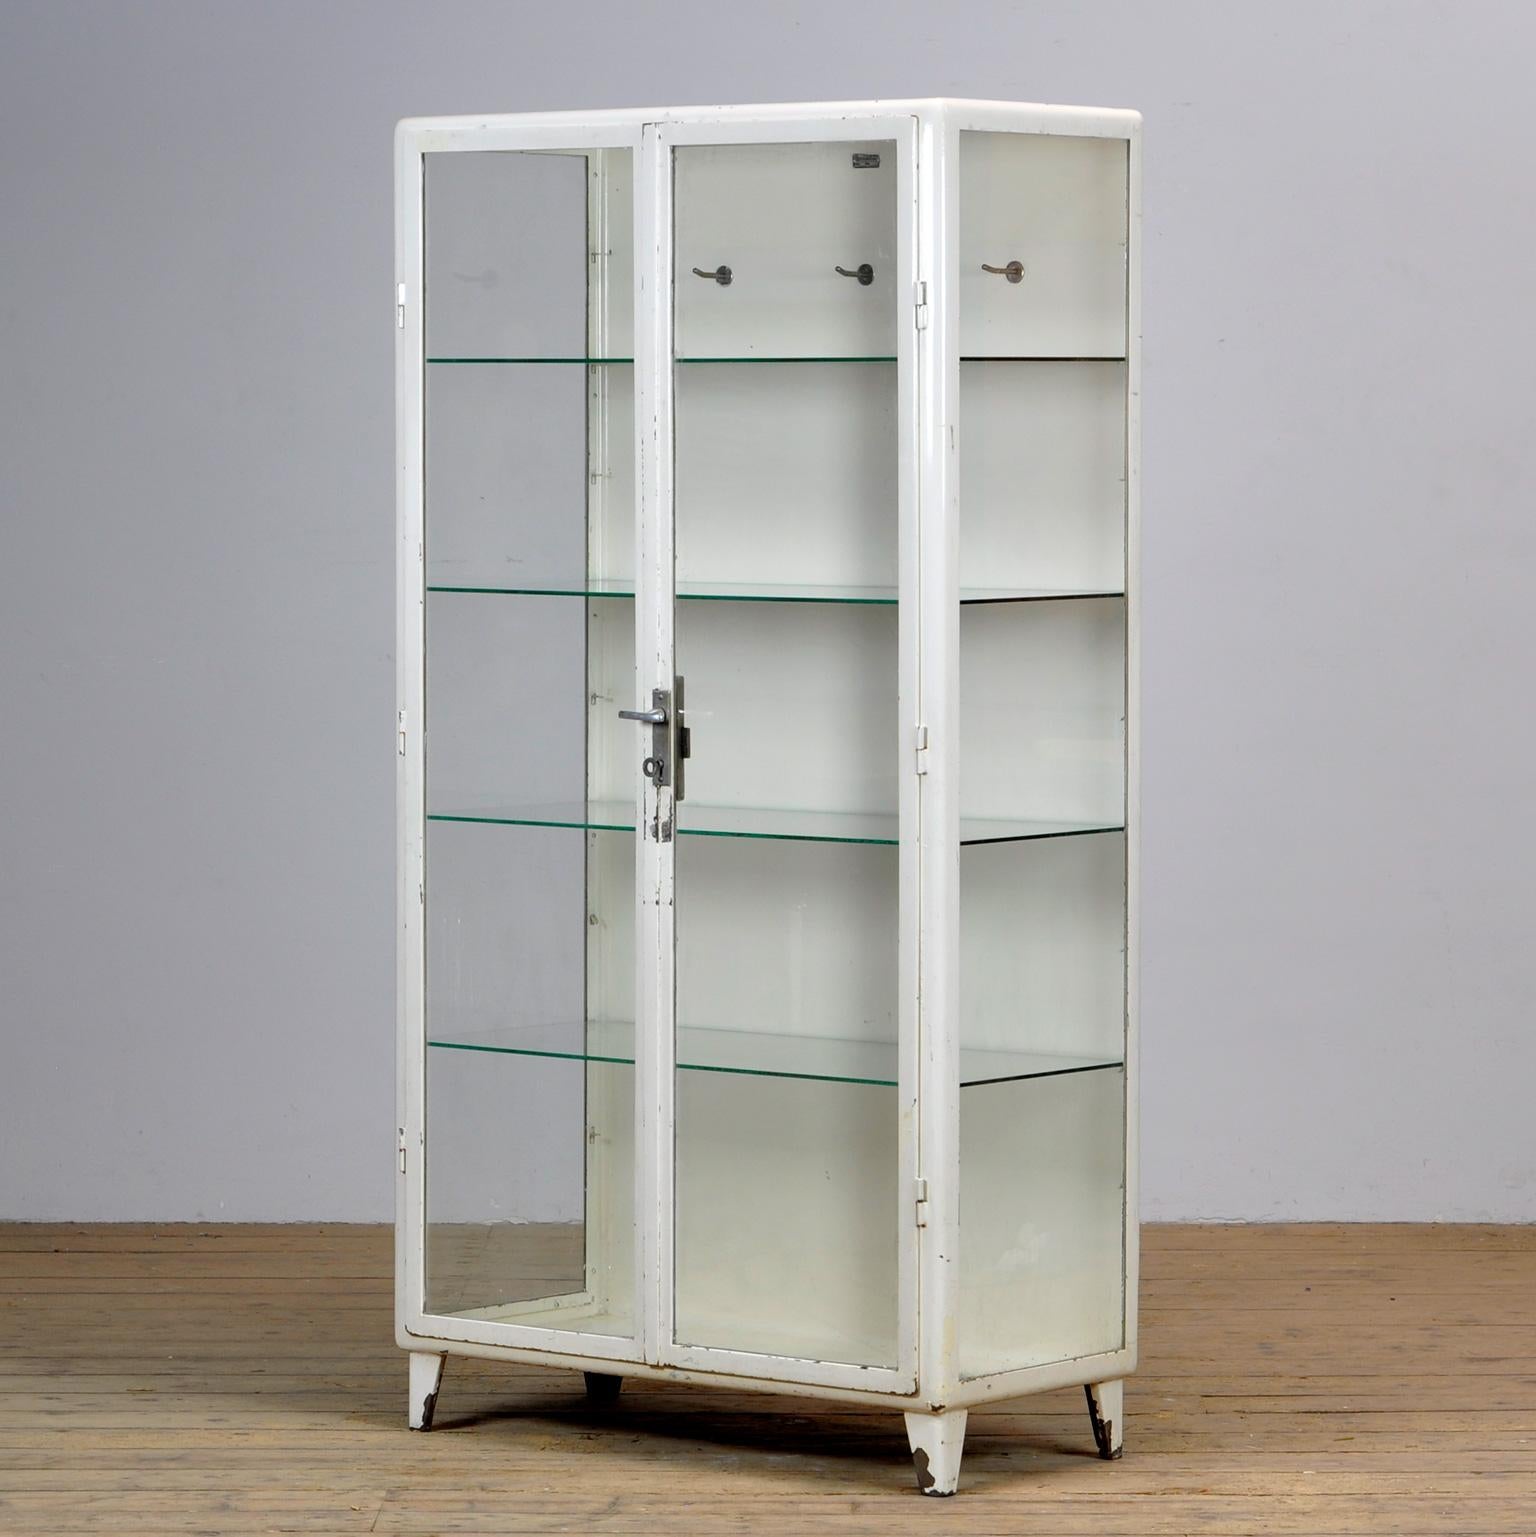 Polish Vintage Steel And Glass Medical Cabinet, 1960s For Sale